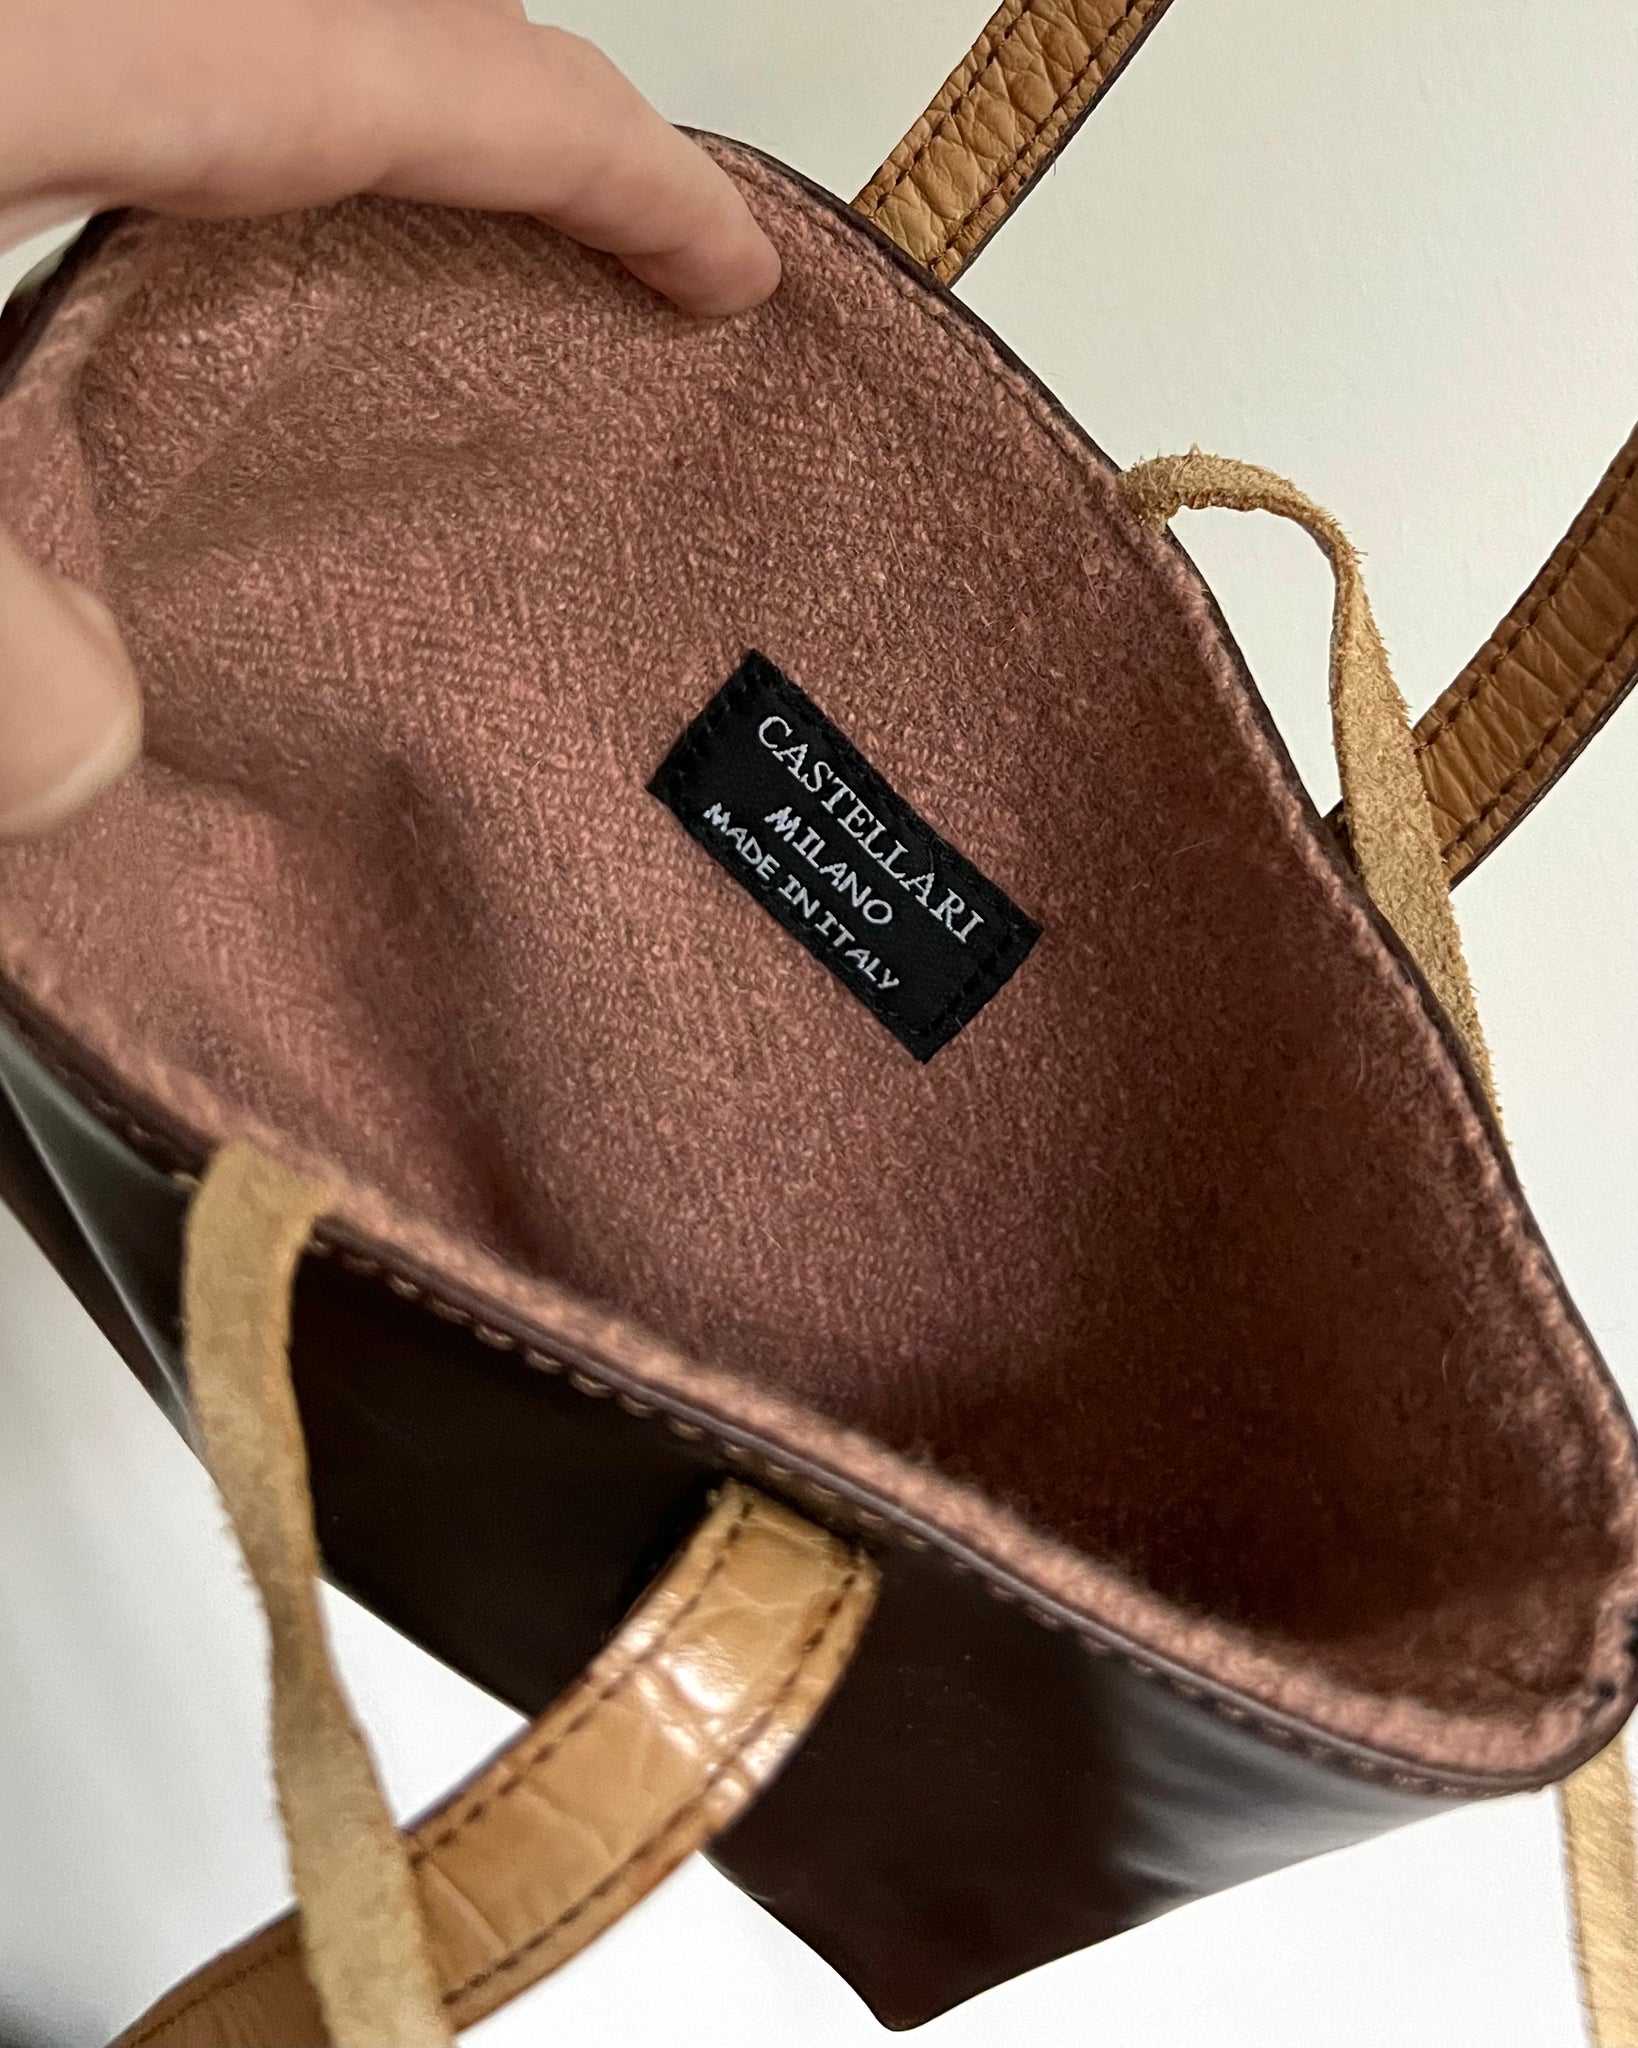 Italian Brown Leather Handbag